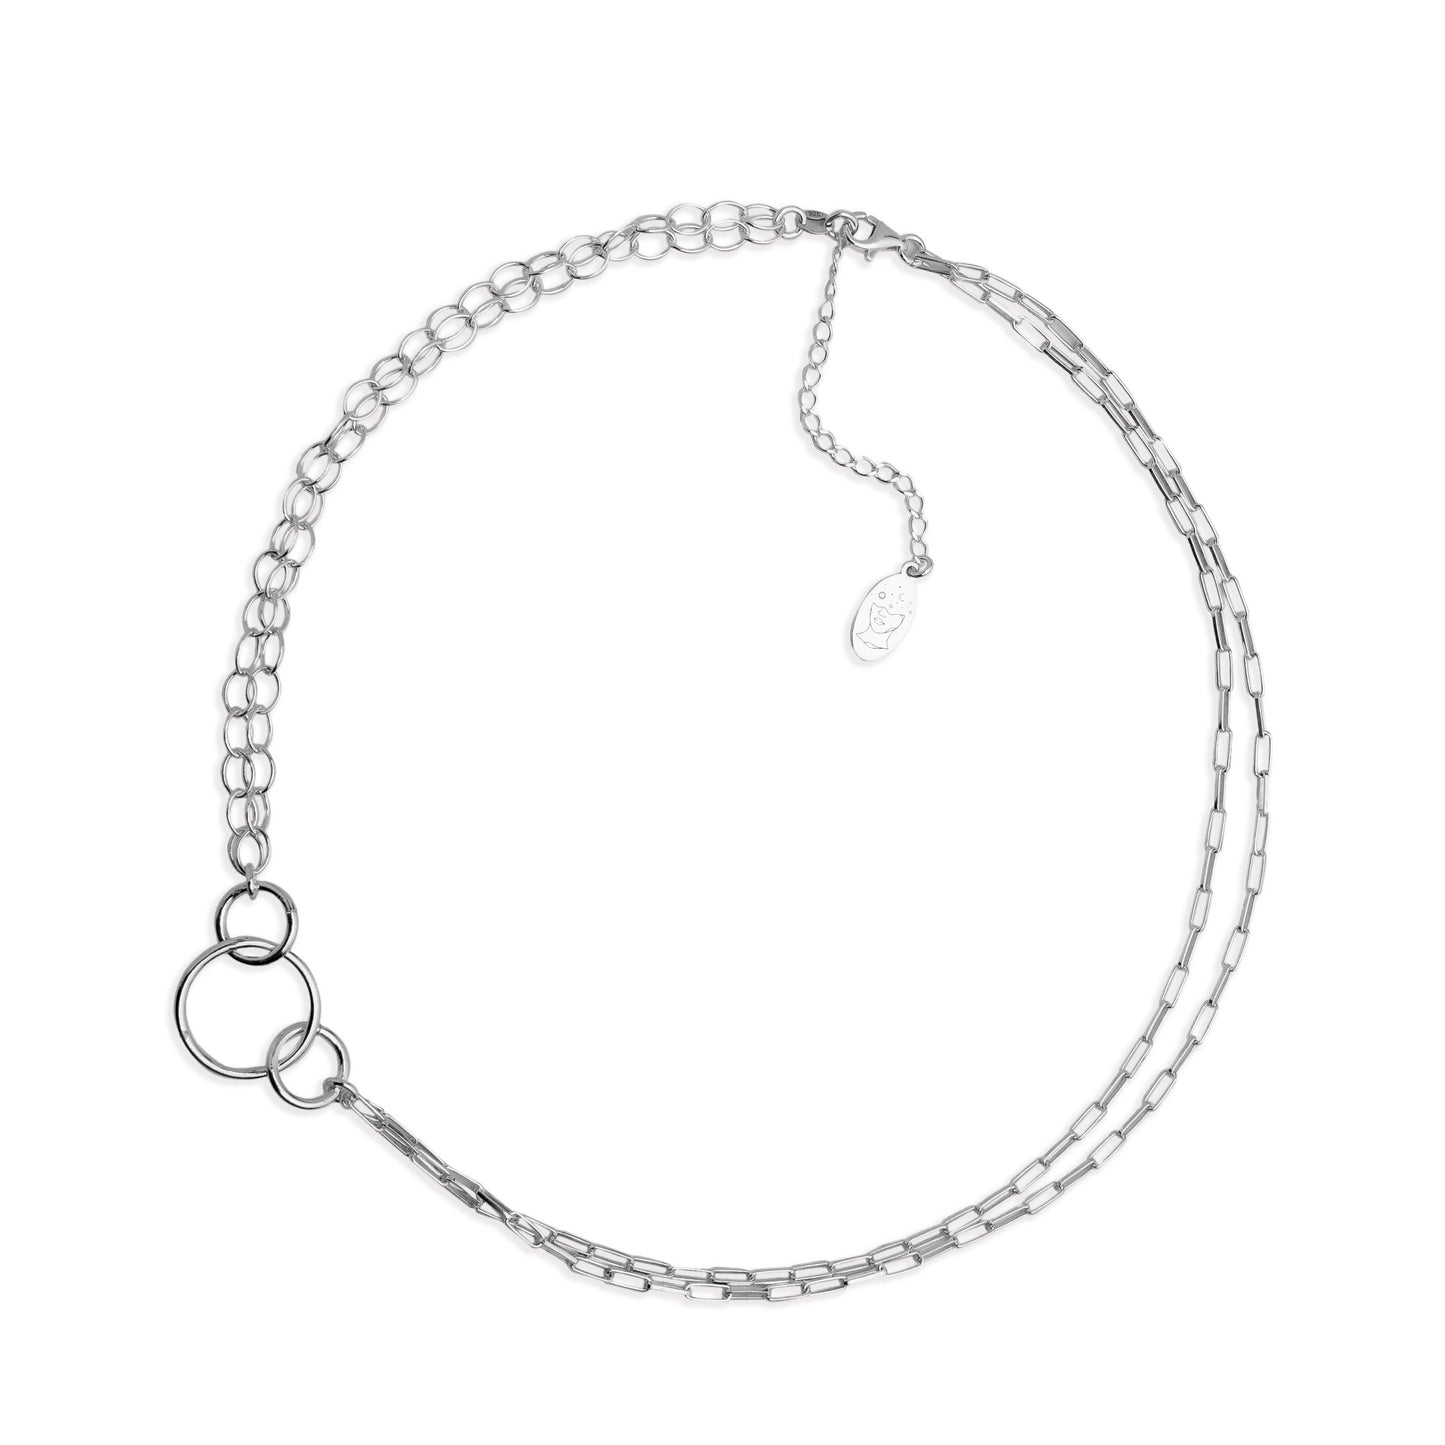 Elegant Chain Necklace